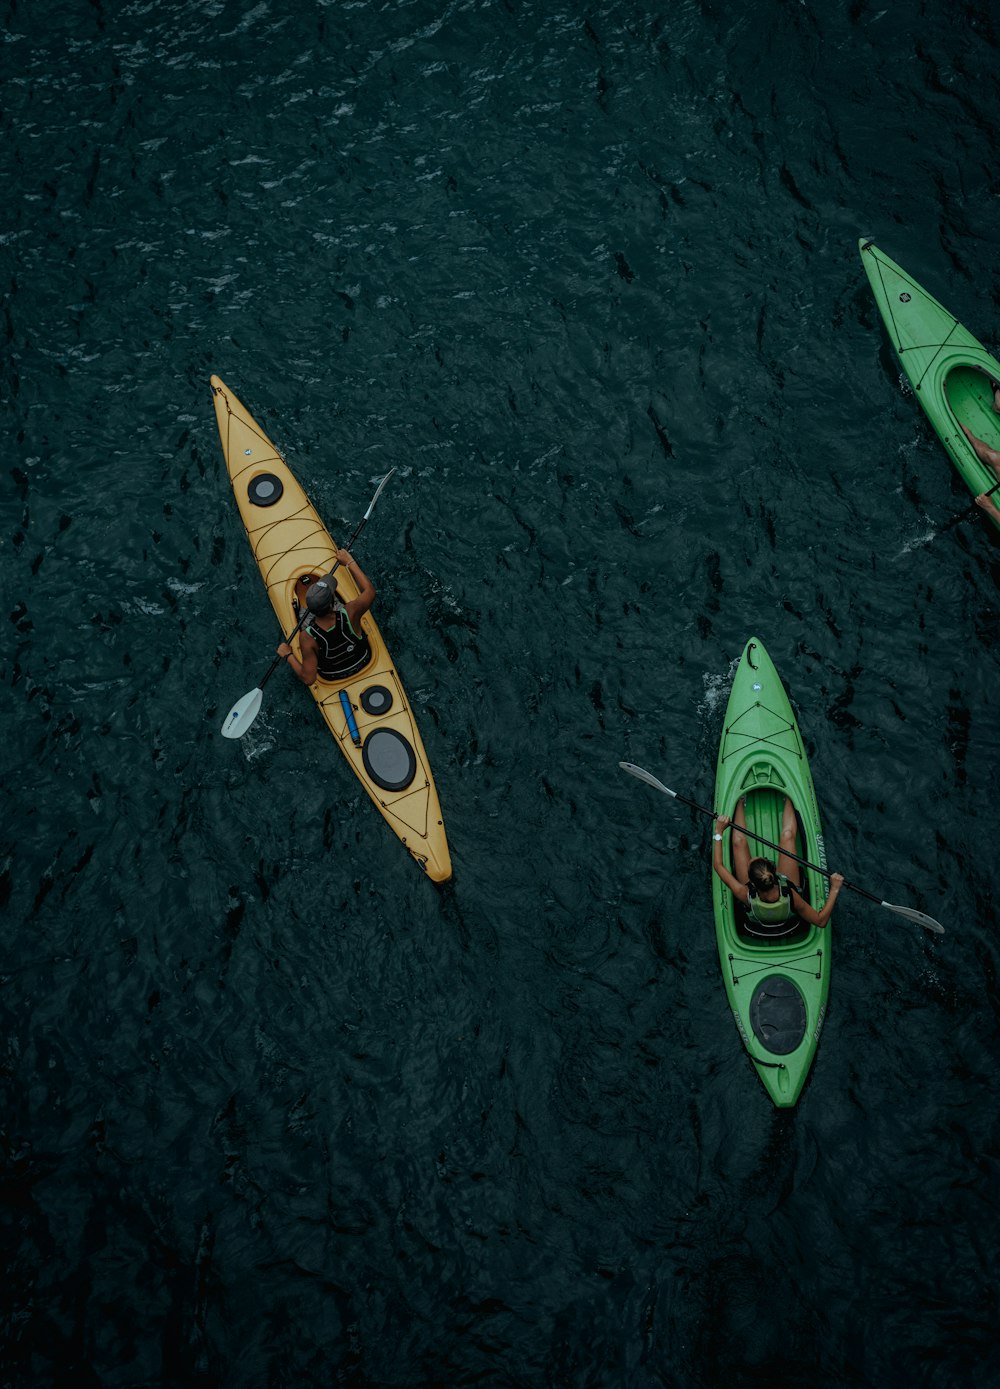 three people kayaking on body of water